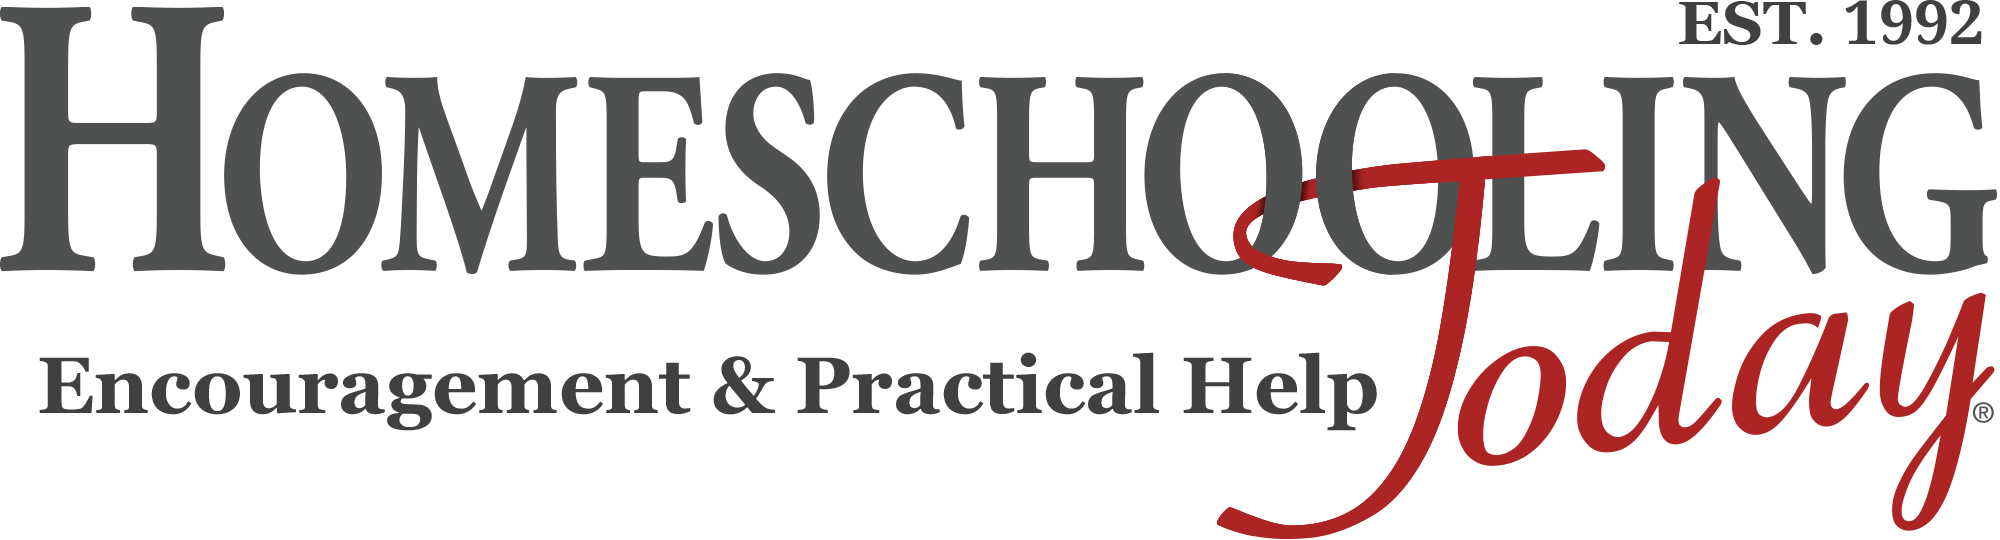 Homeschooling Today Holiday 2020 logo